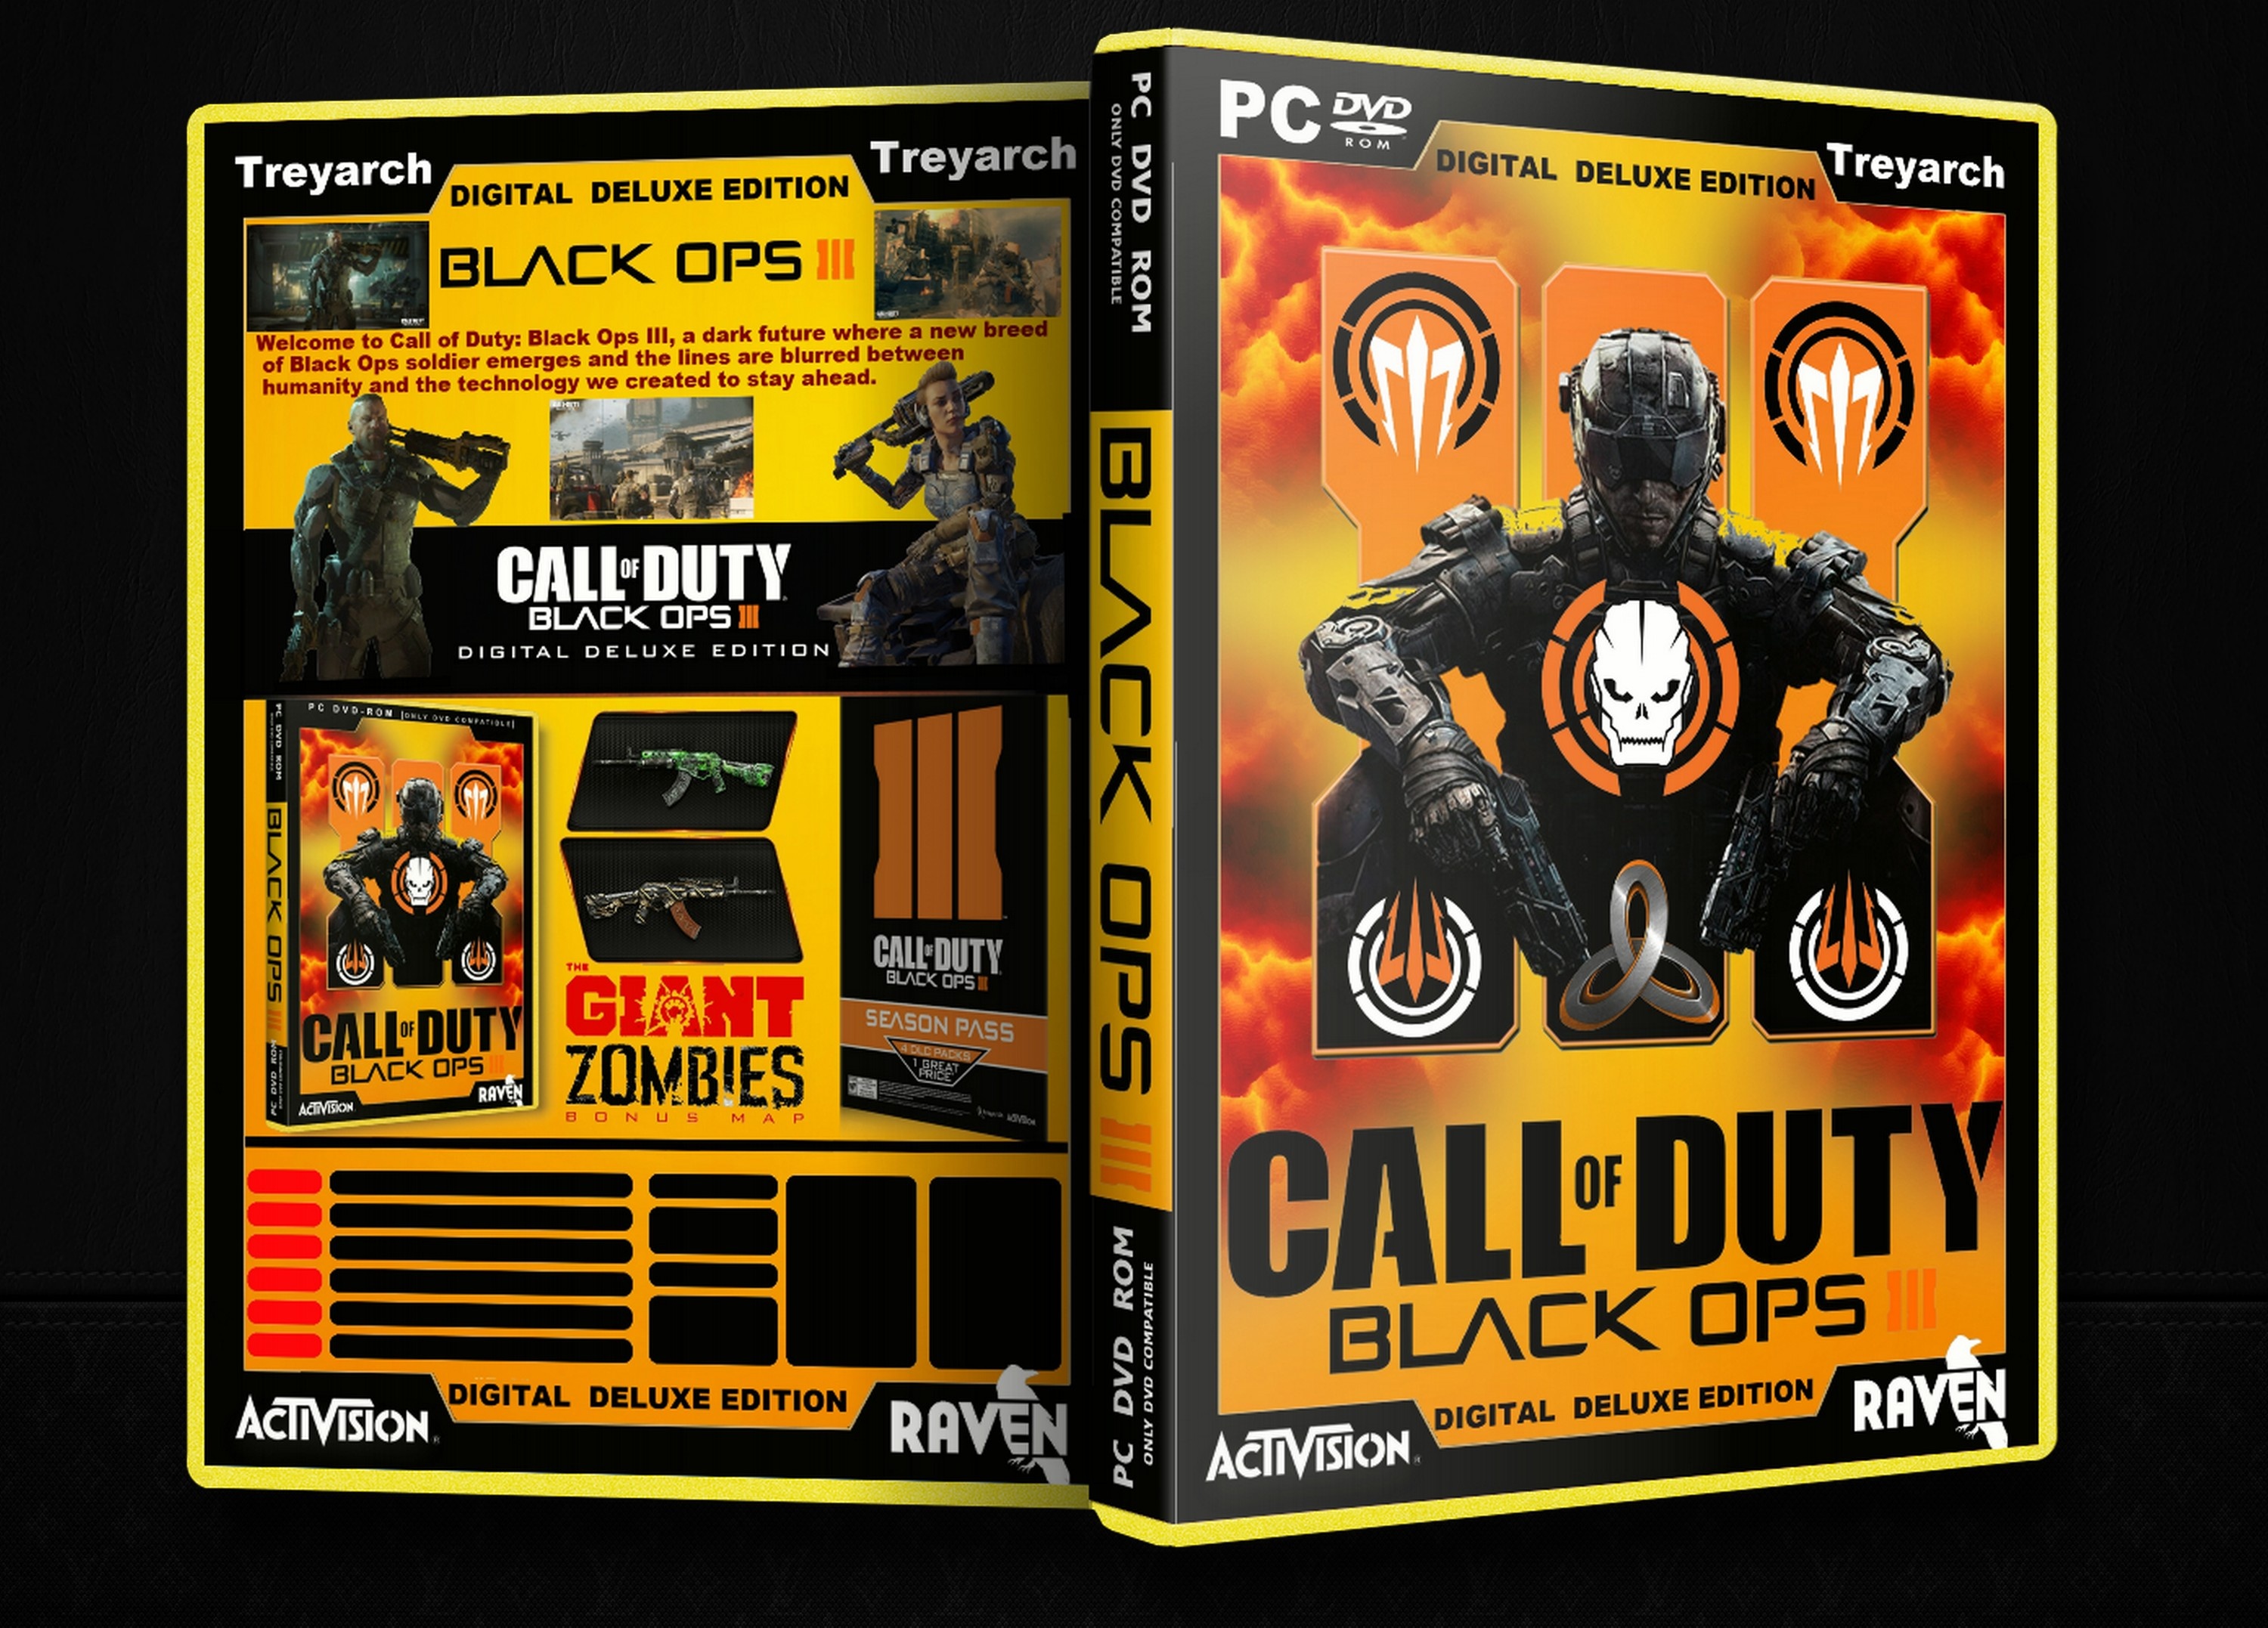 Call of Duty Black Ops III box cover